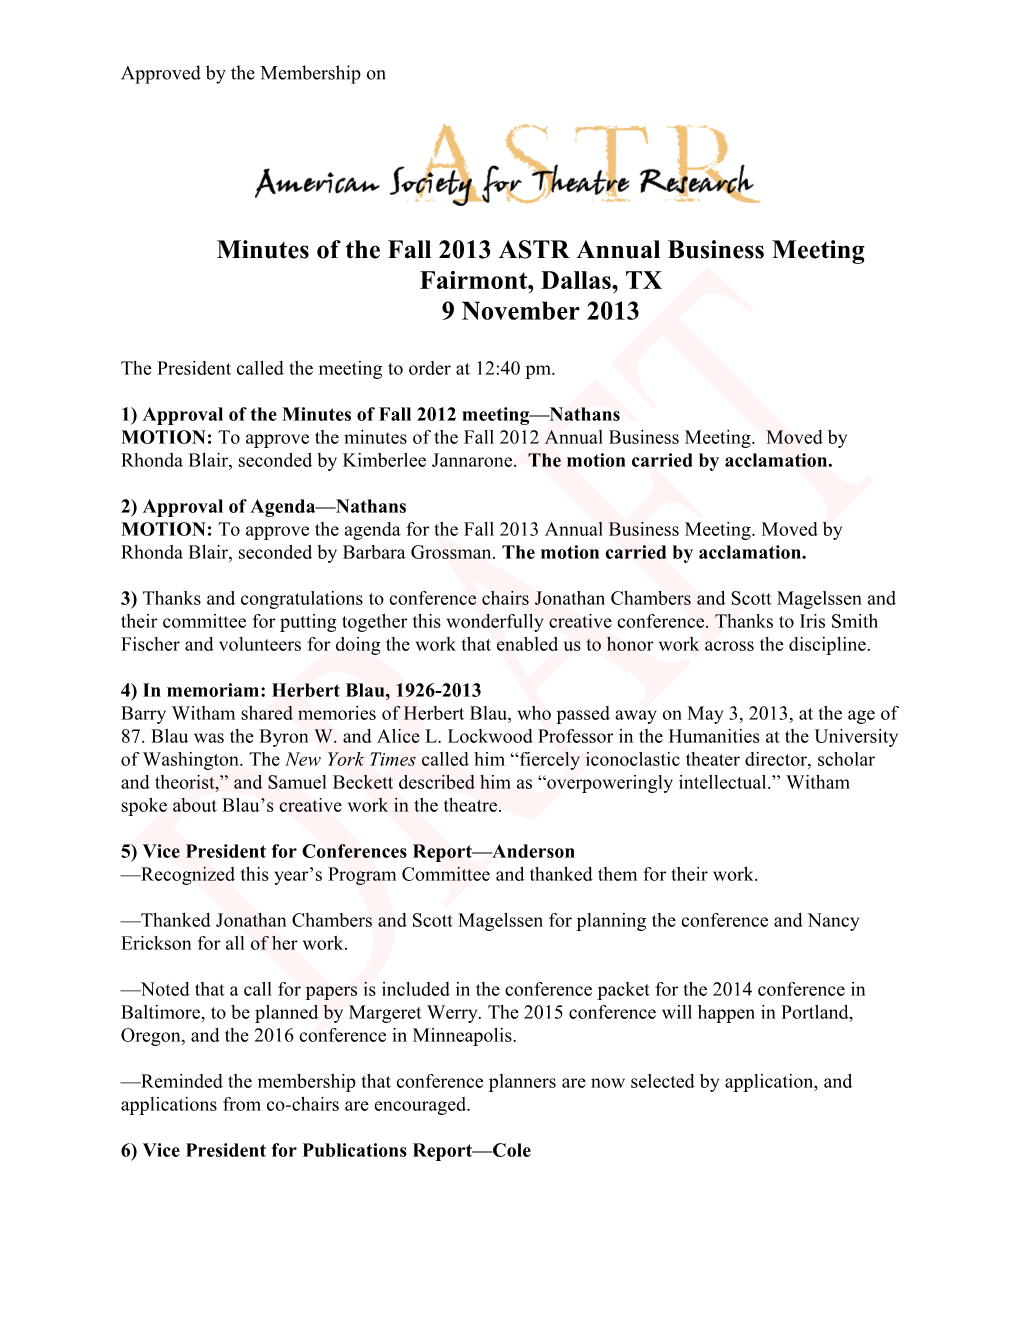 Annual General Meeting AGENDA Detailed Version